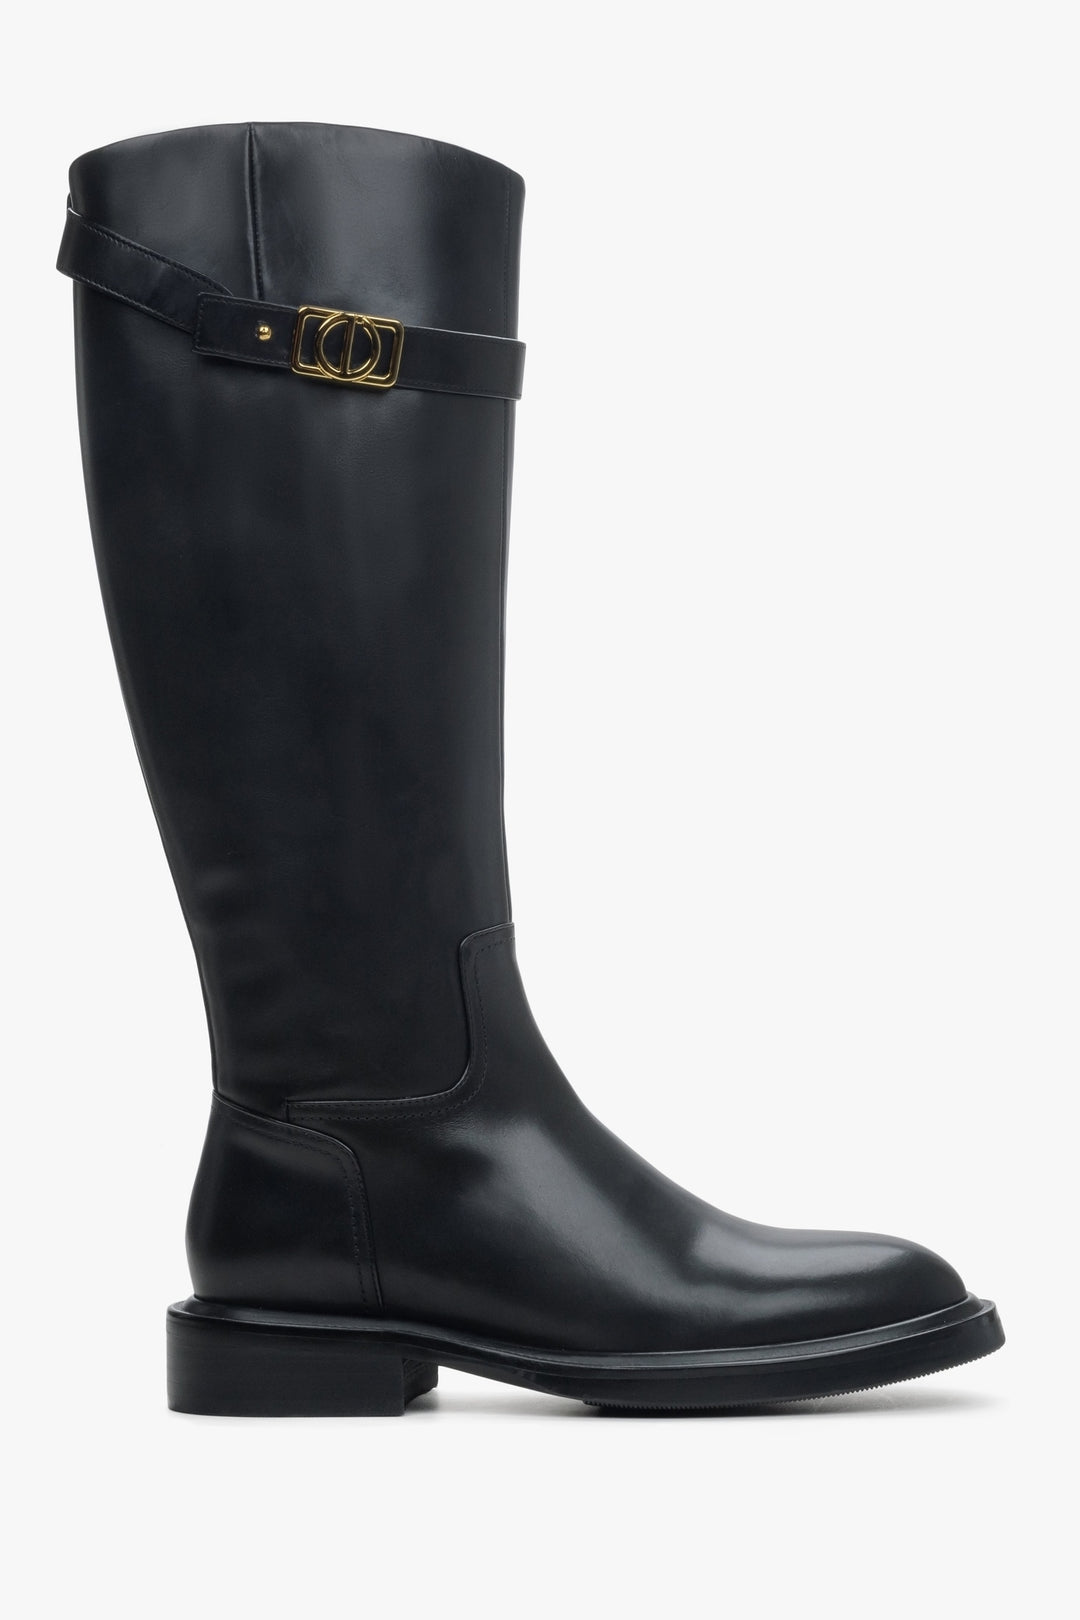 Women's black leather boots with decorative strap by Estro - shoe profile.